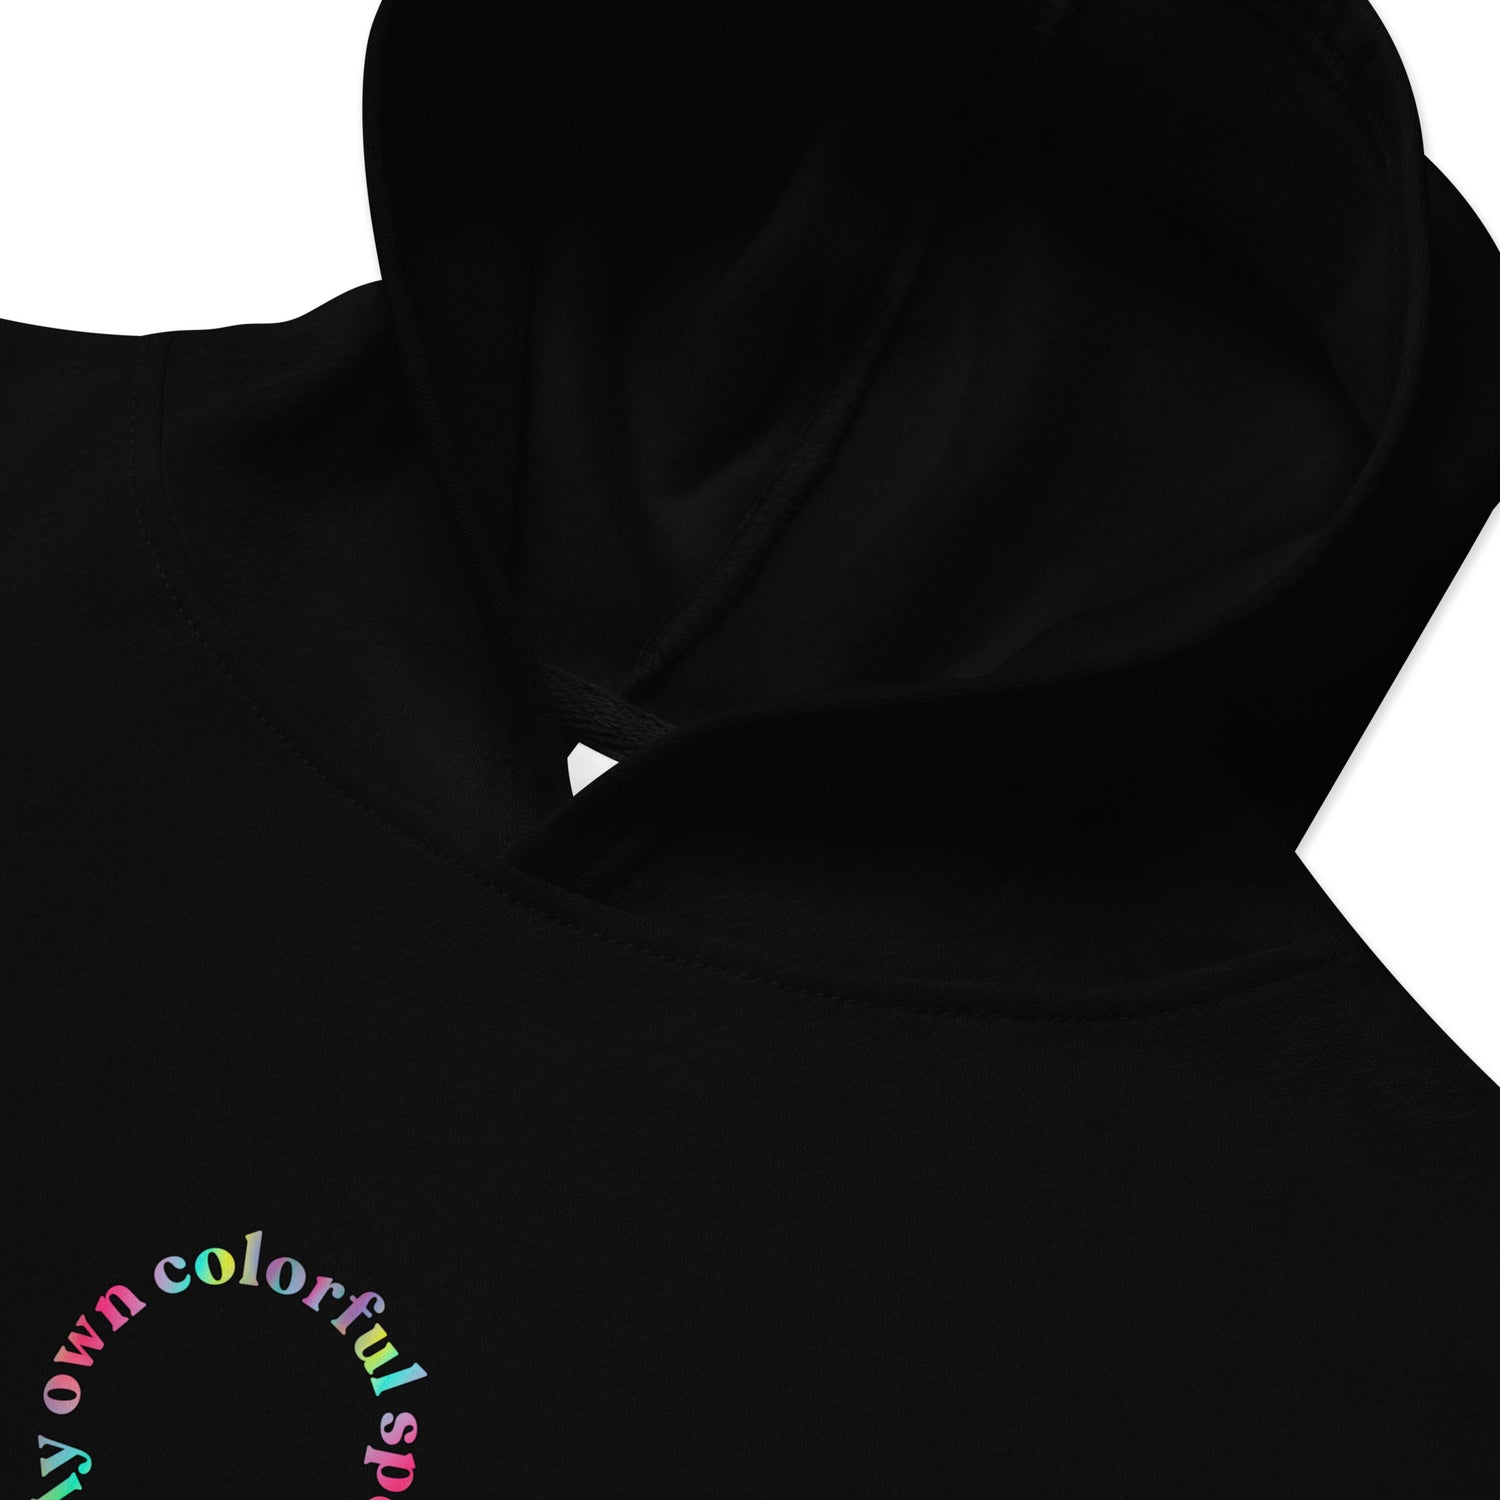 Closeup of Black Kidswear Hoodie featuring "My own colorful spectrum" printed.